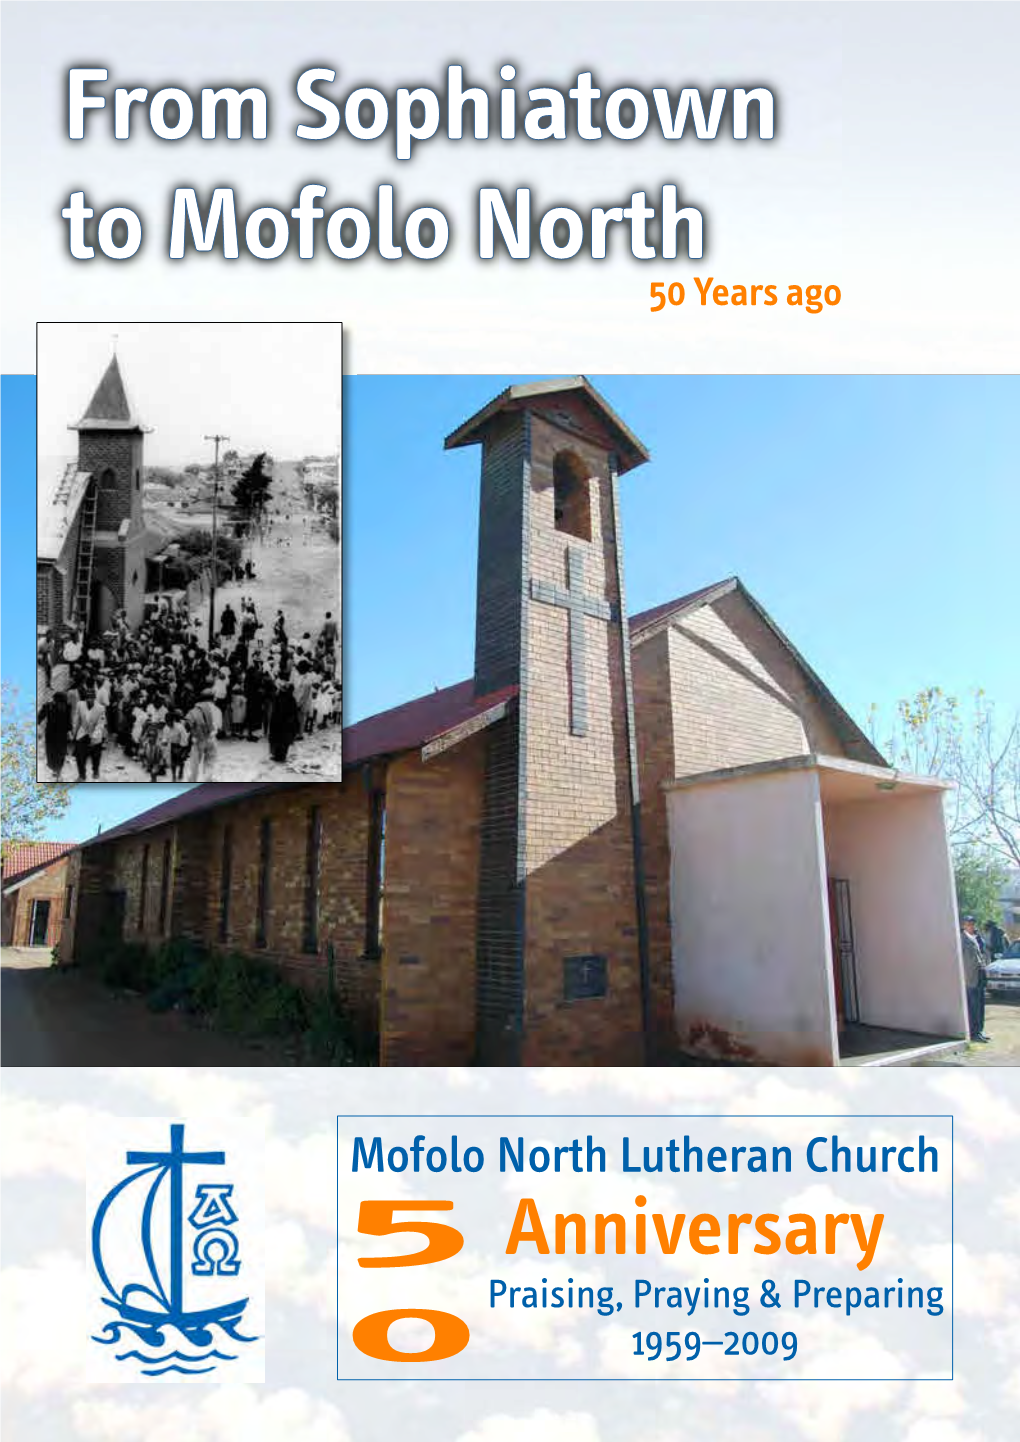 Mofolo North Lutheran Church 5 Anniversary Praising, Praying & Preparing 0 1959–2009